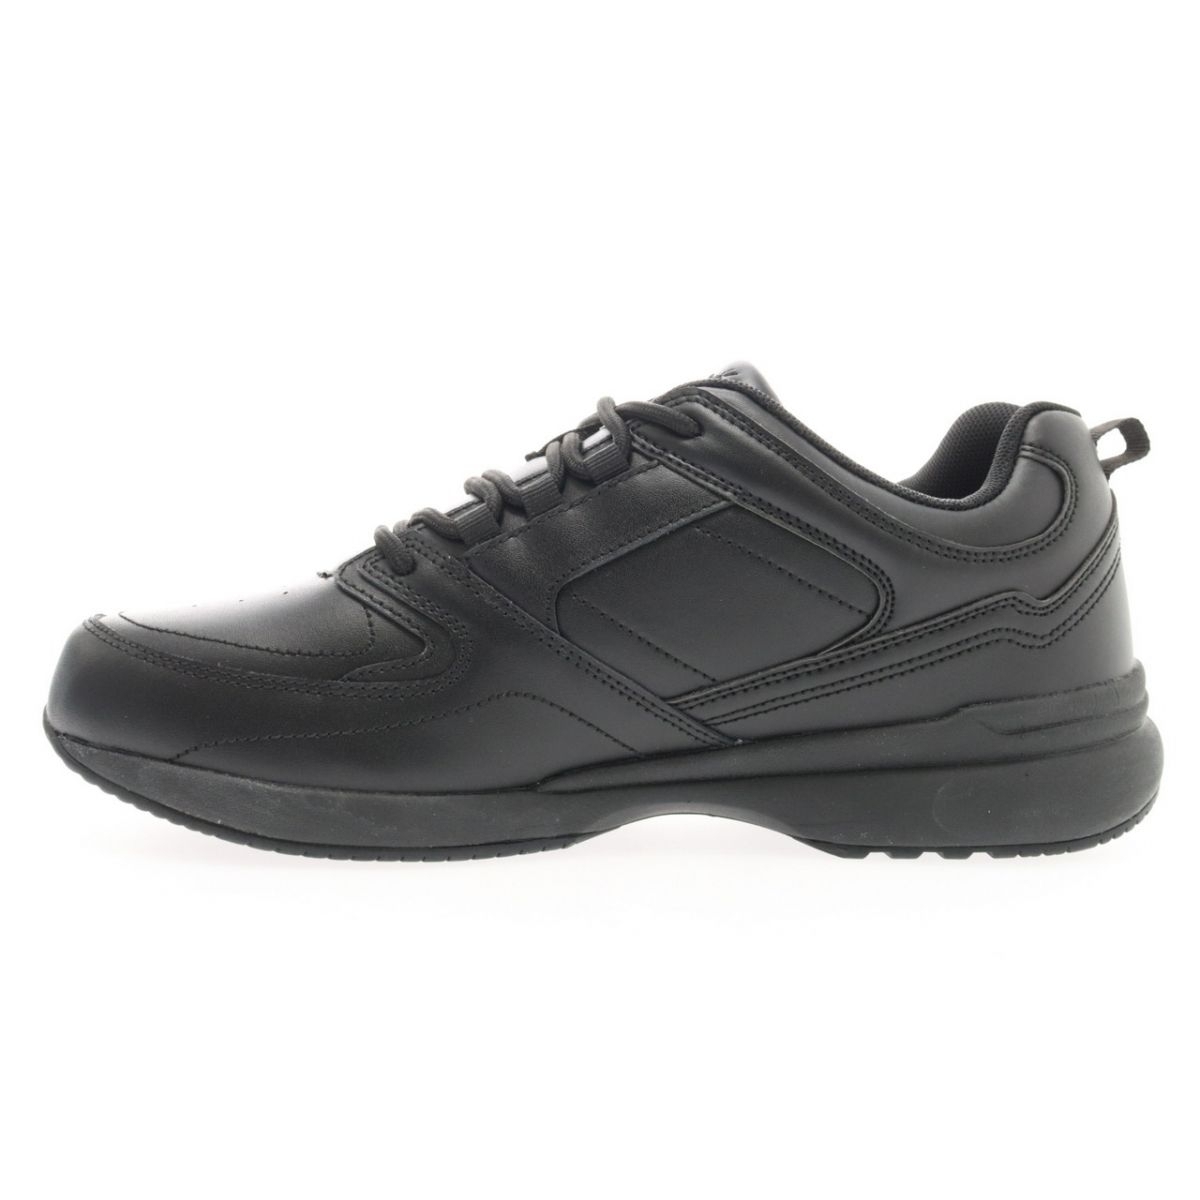 Propet Men's Life Walker Sport Sneaker Black - MAA272LBLK BLACK - BLACK, 10 Wide